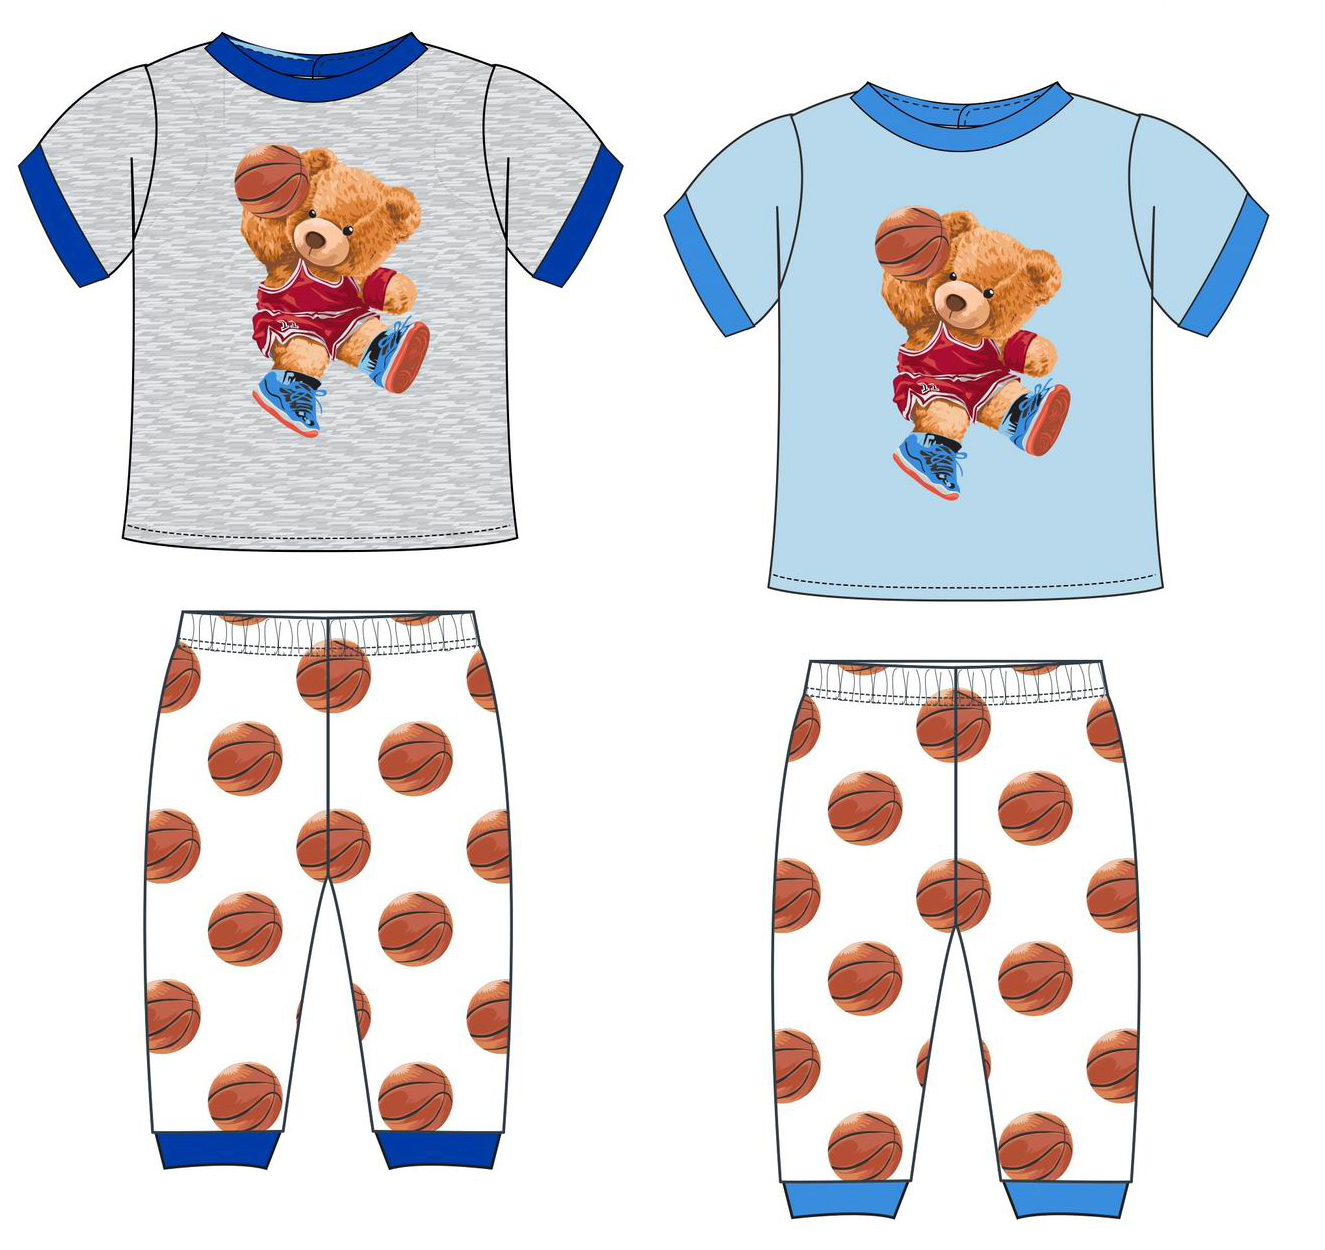 Boy's 2 PC. Rib Pajama Sets w/ Short-Sleeve Shirt & Pull-On Pants - BASKETBALL Bear Print - Sizes 2T